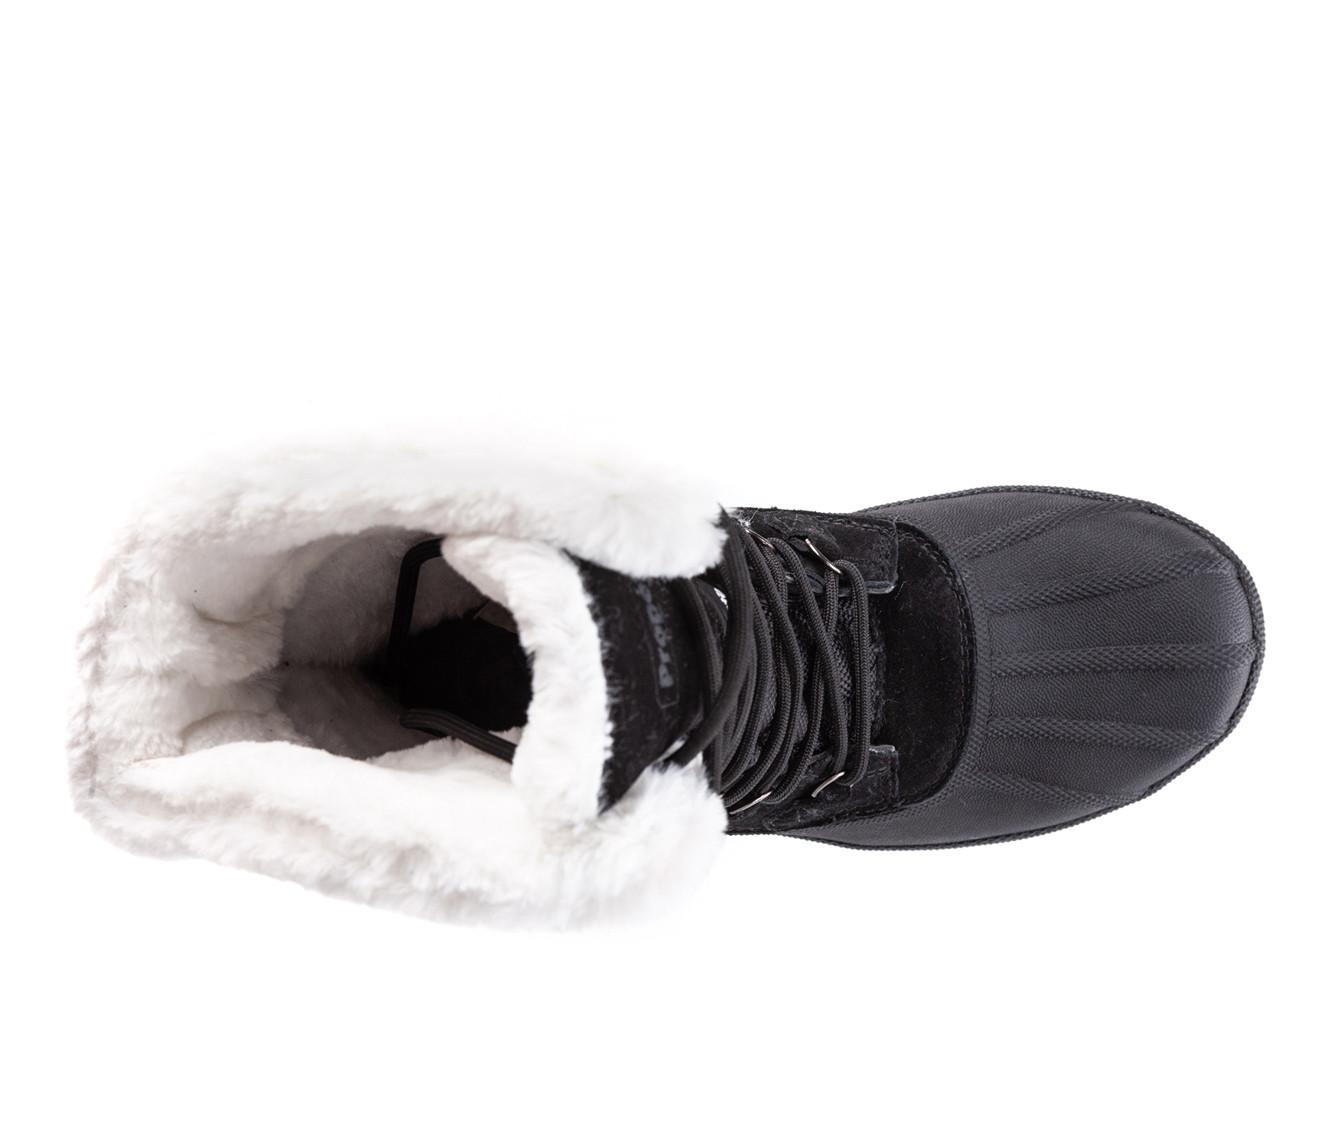 Women's Propet Lumi Tall Lace Waterproof Winter Boots